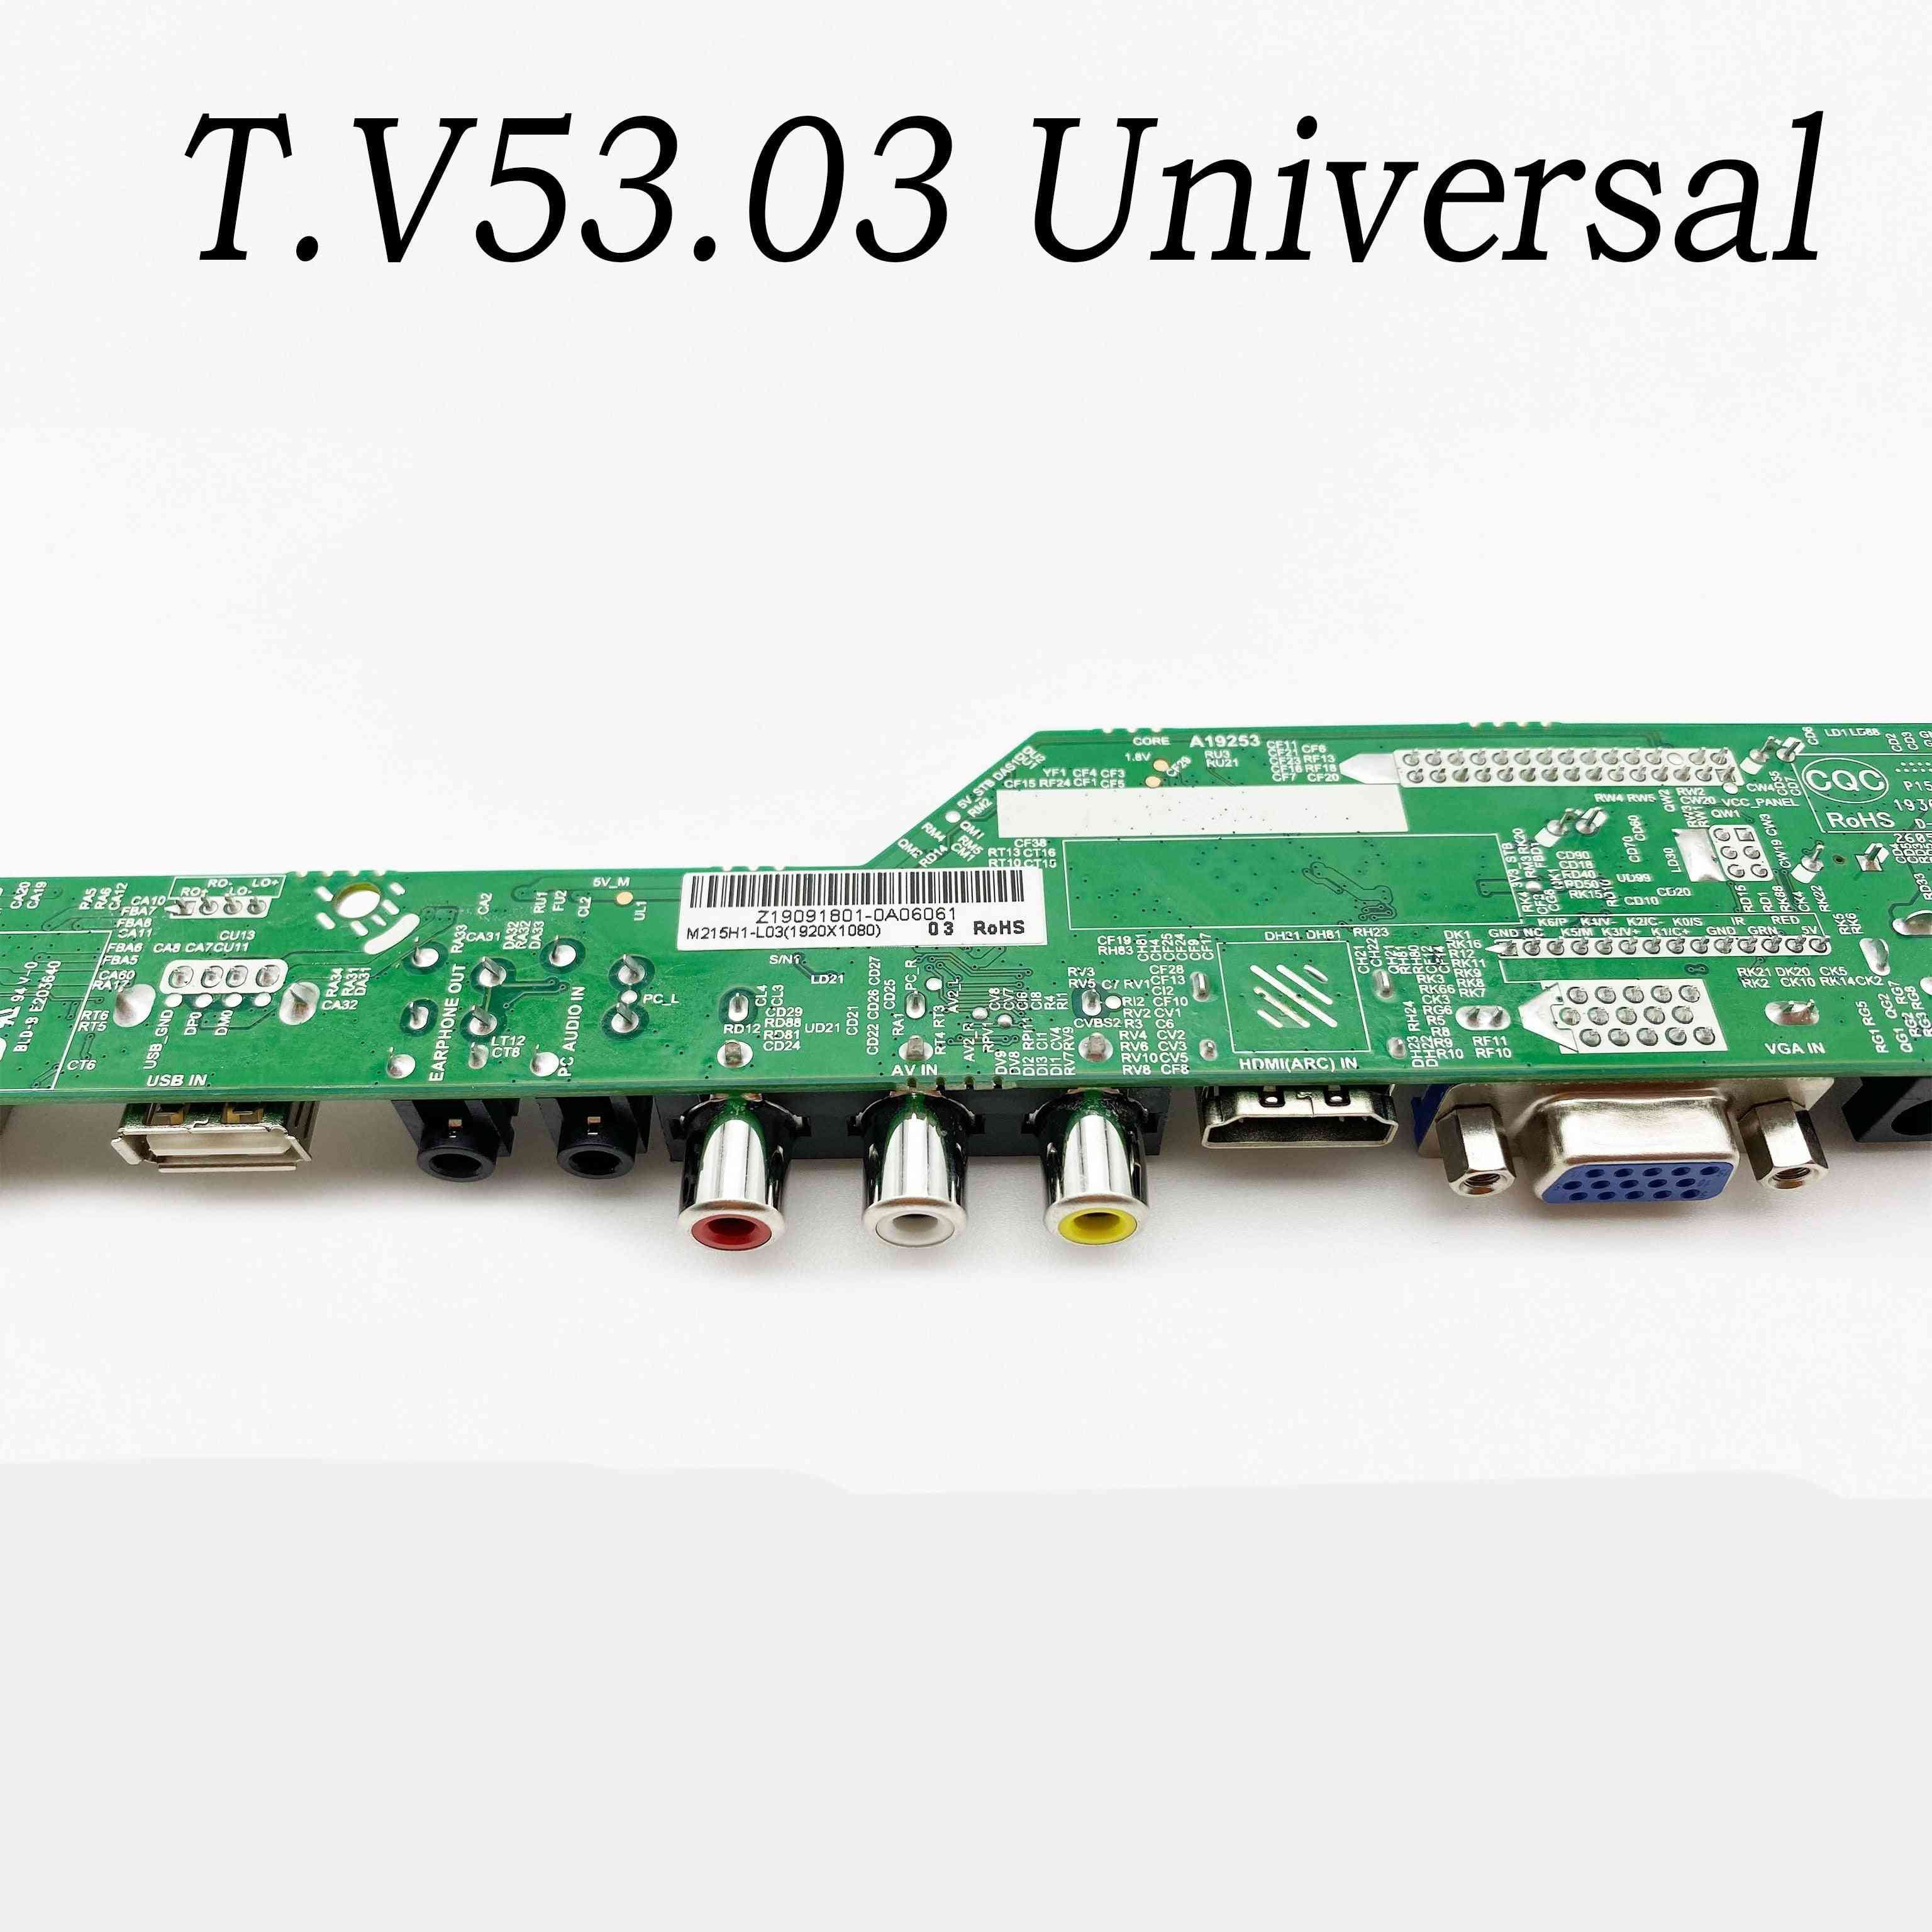 Universele lcd tv controller driver board, pc / vga / hdmi / usb interface + 7 key board + 2 lamp inverter